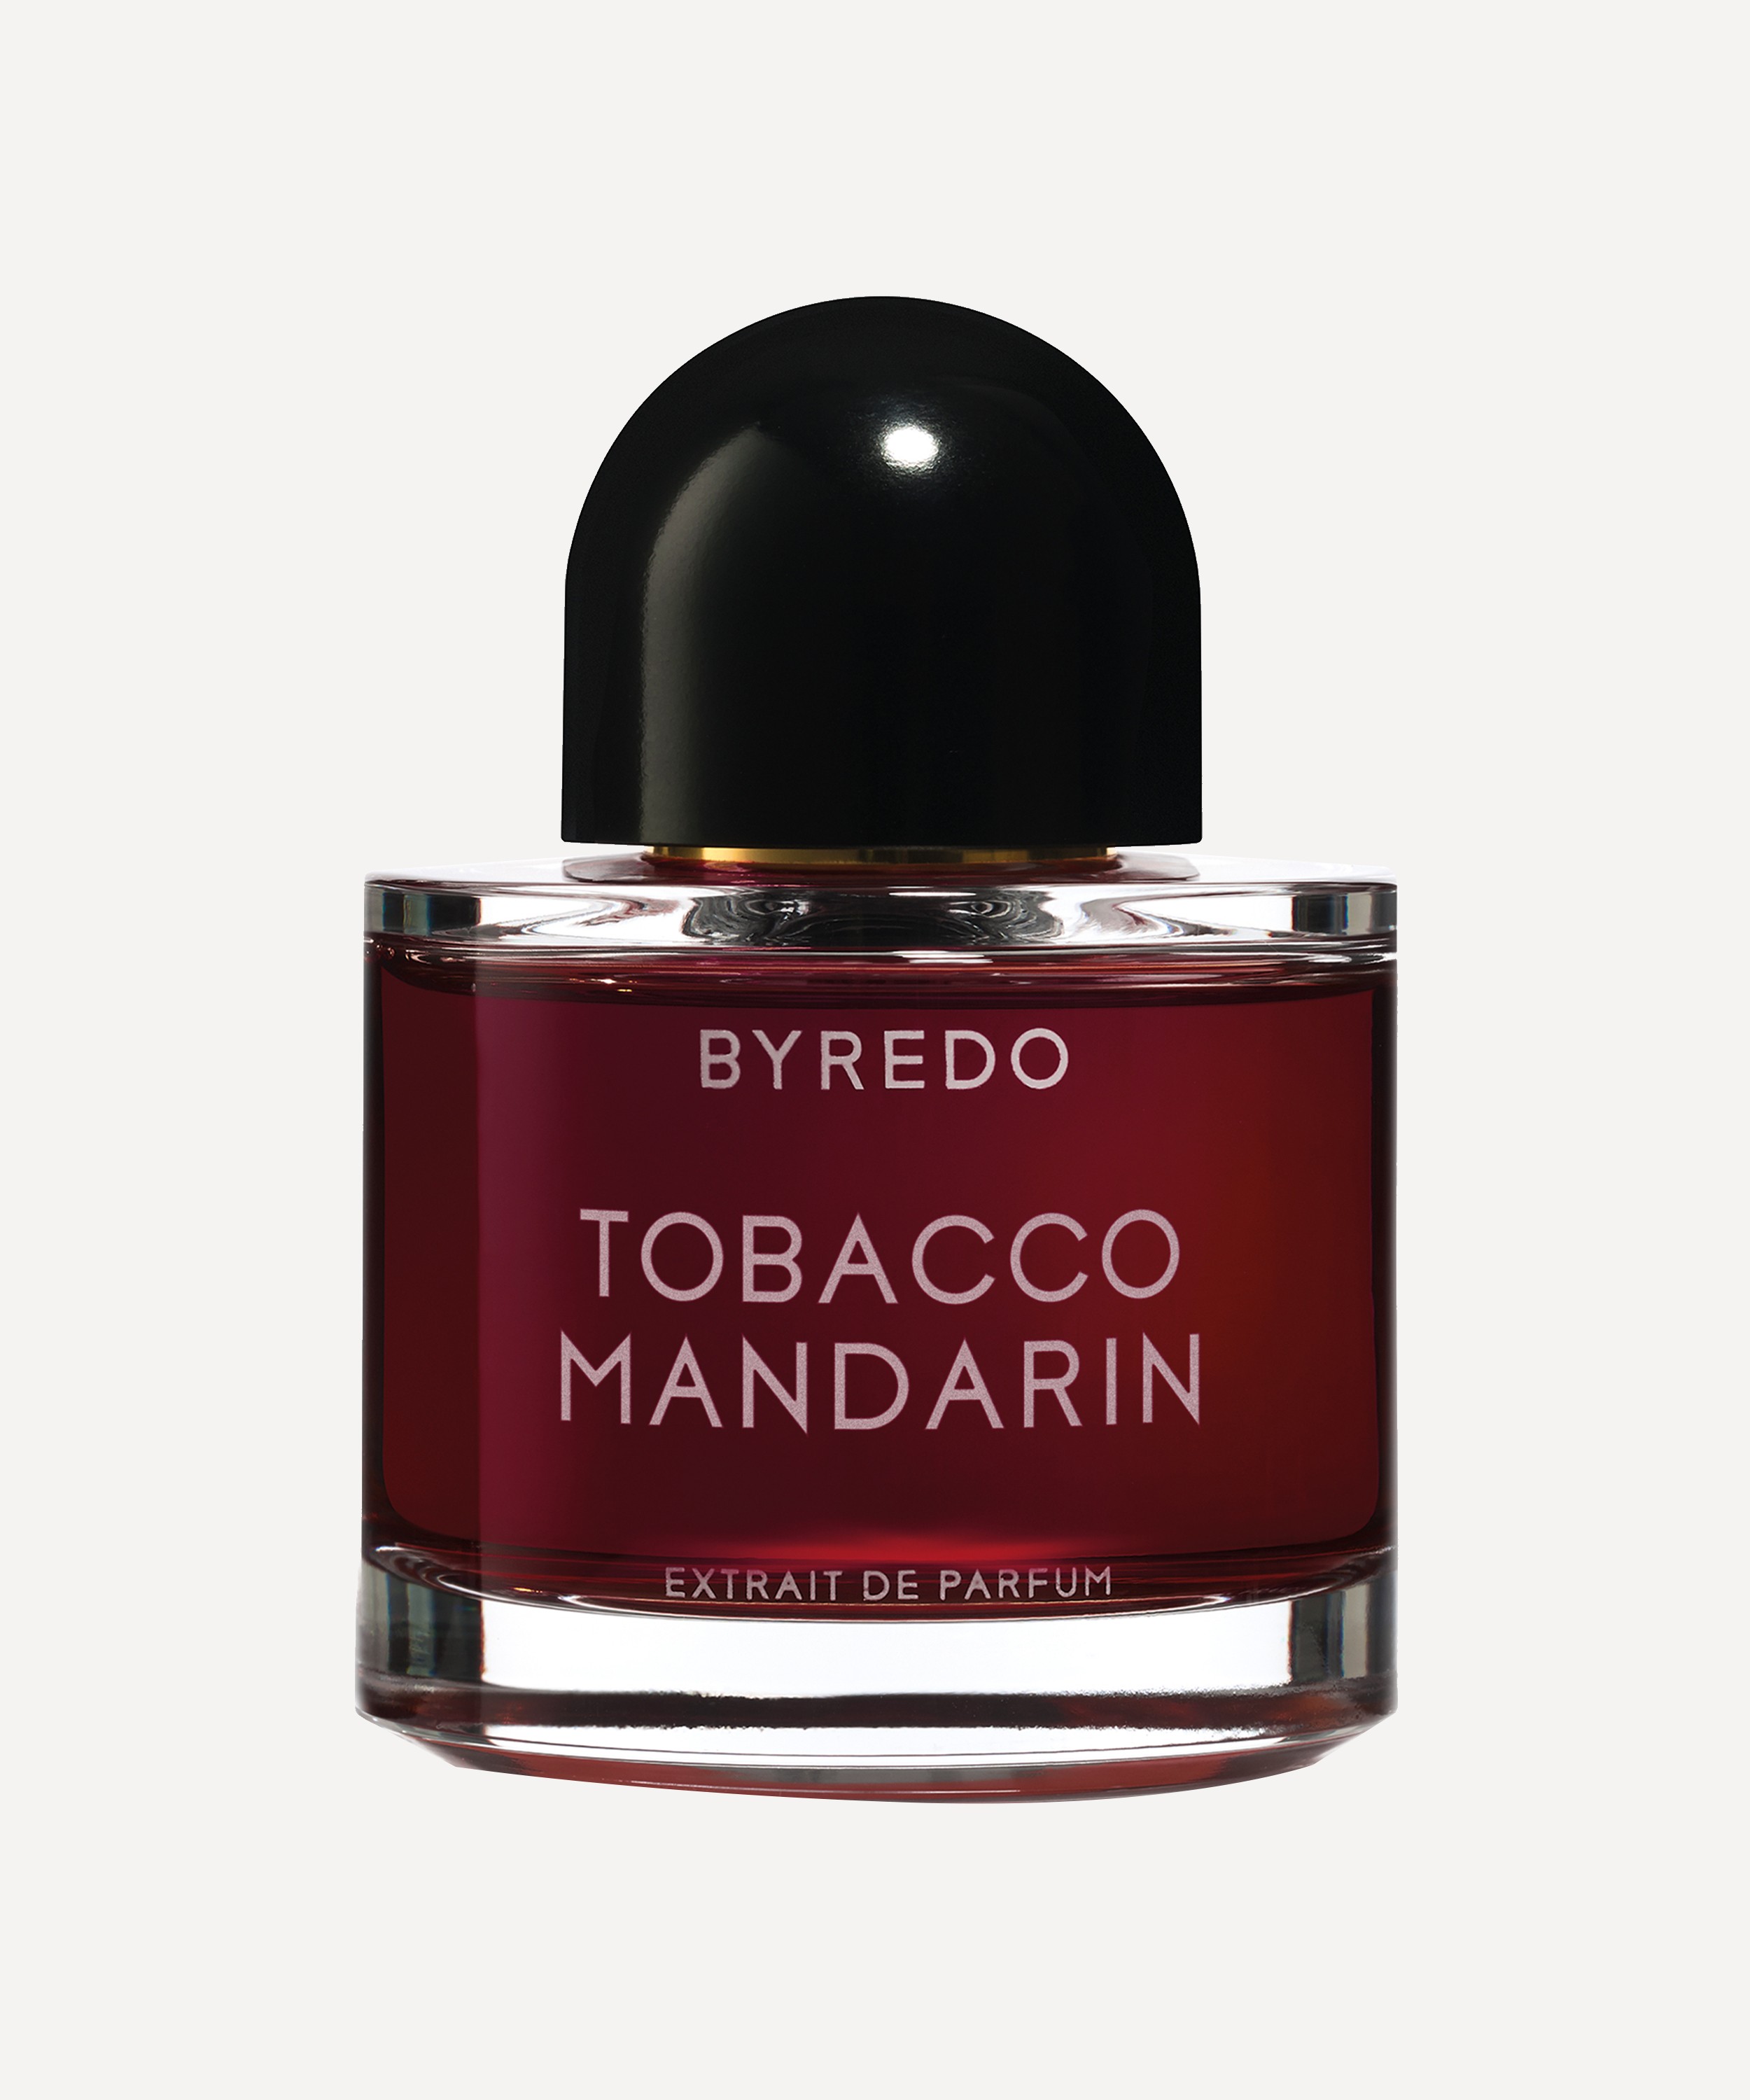 Byredo - Tobacco Mandarin Extrait de Parfum 50ml image number 0